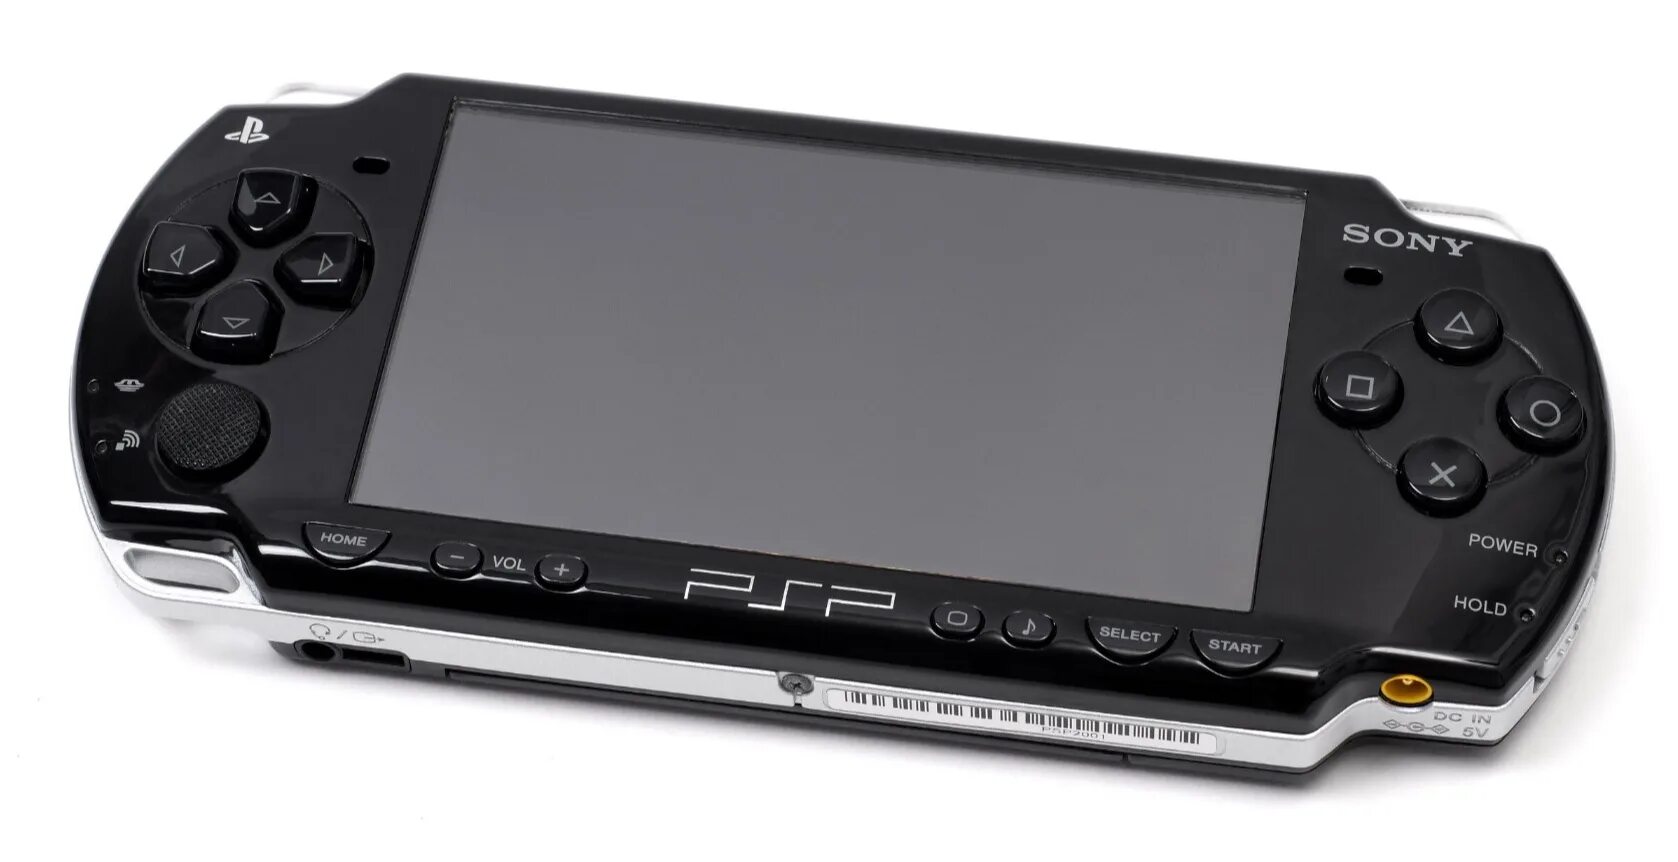 Sony PLAYSTATION Portable 2004. PLAYSTATION Portable e1000. Sony PLAYSTATION Portable PSP 3000. Sony PLAYSTATION Portable go Black (PSP-n1008/Rus).